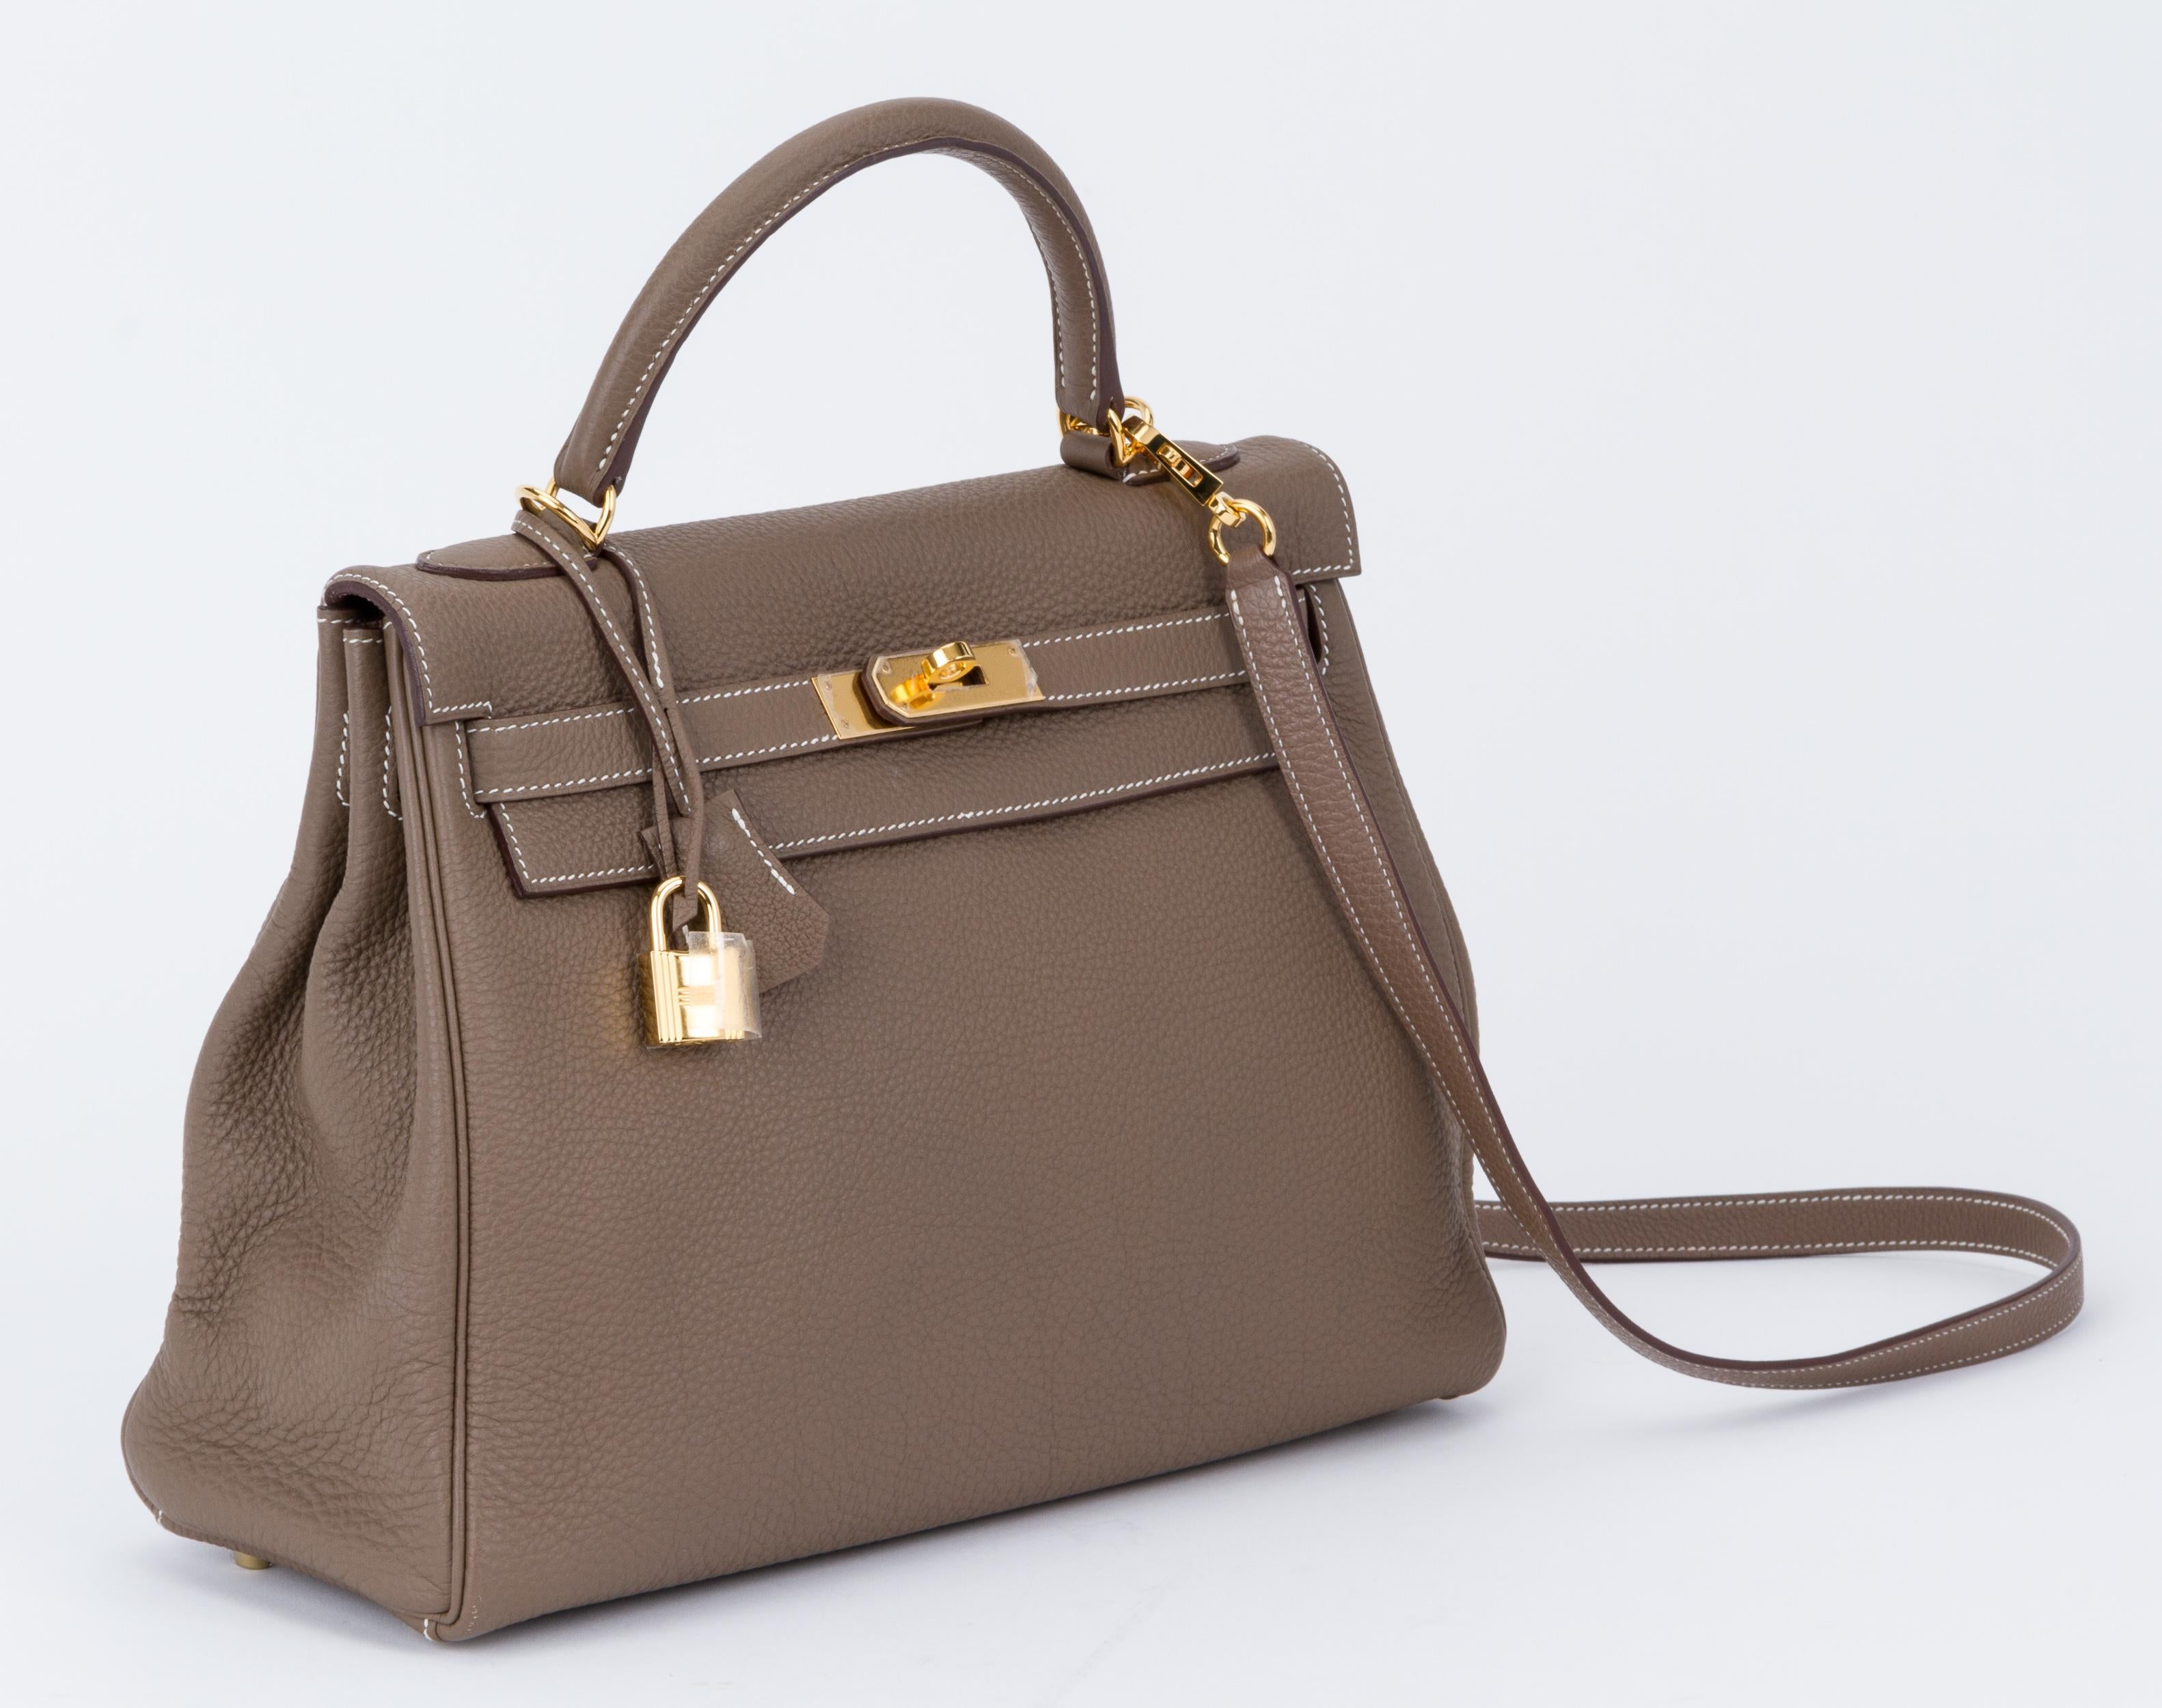 Hermès Kelly bag 32 cm retourne in etoupe togo leather and gold-plated hardware. Blind stamped 